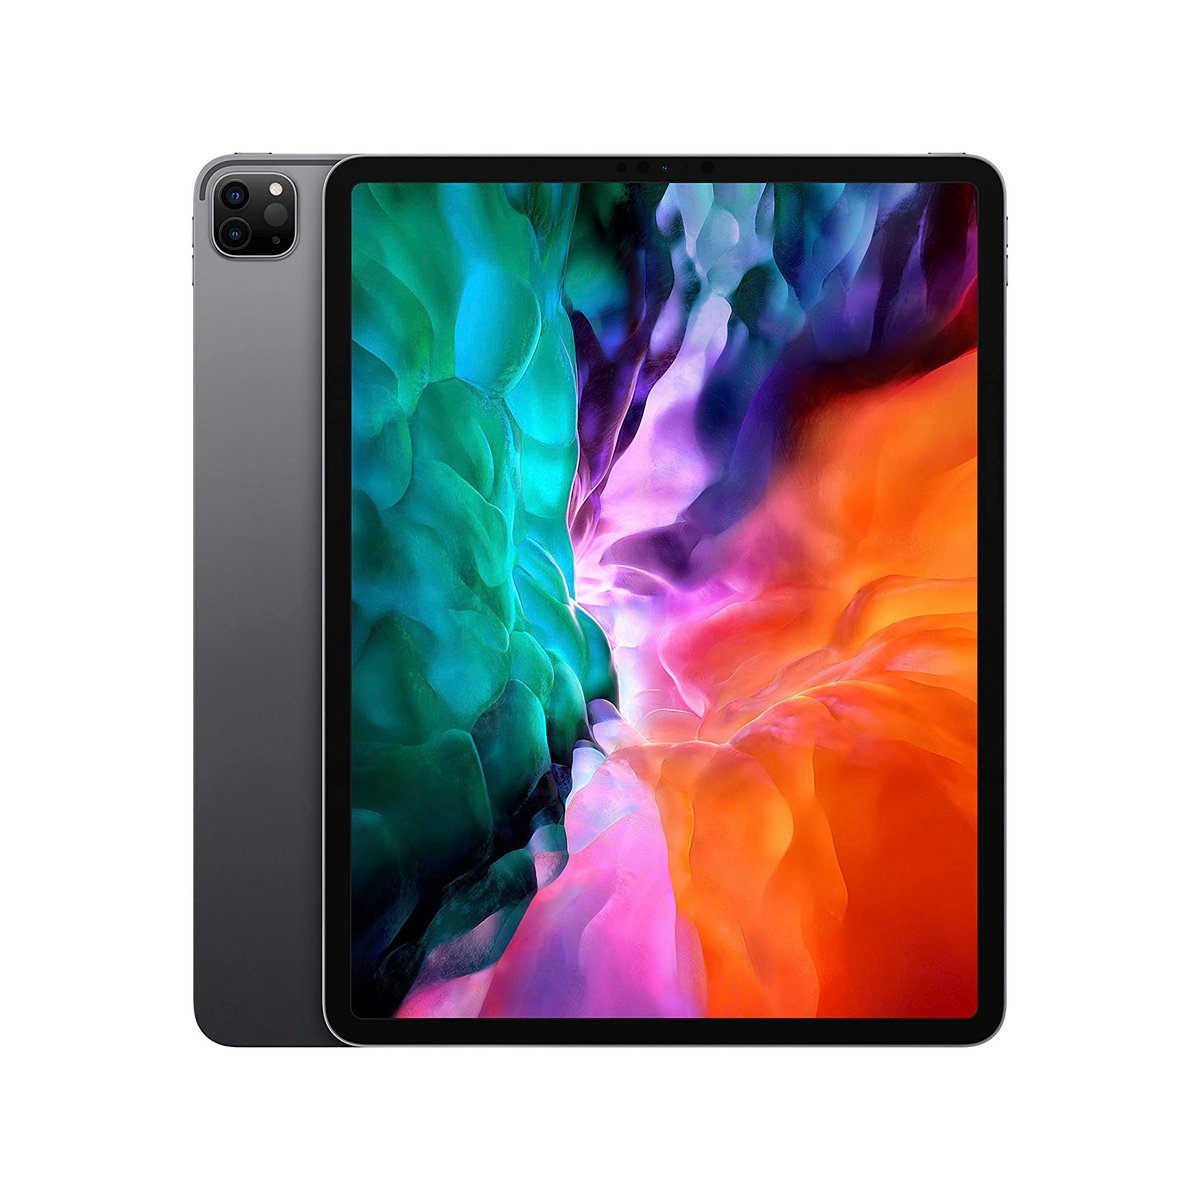 Apple iPad Pro (12.9-inch, Wi-Fi, 256GB) - Space Gray (4th Generation